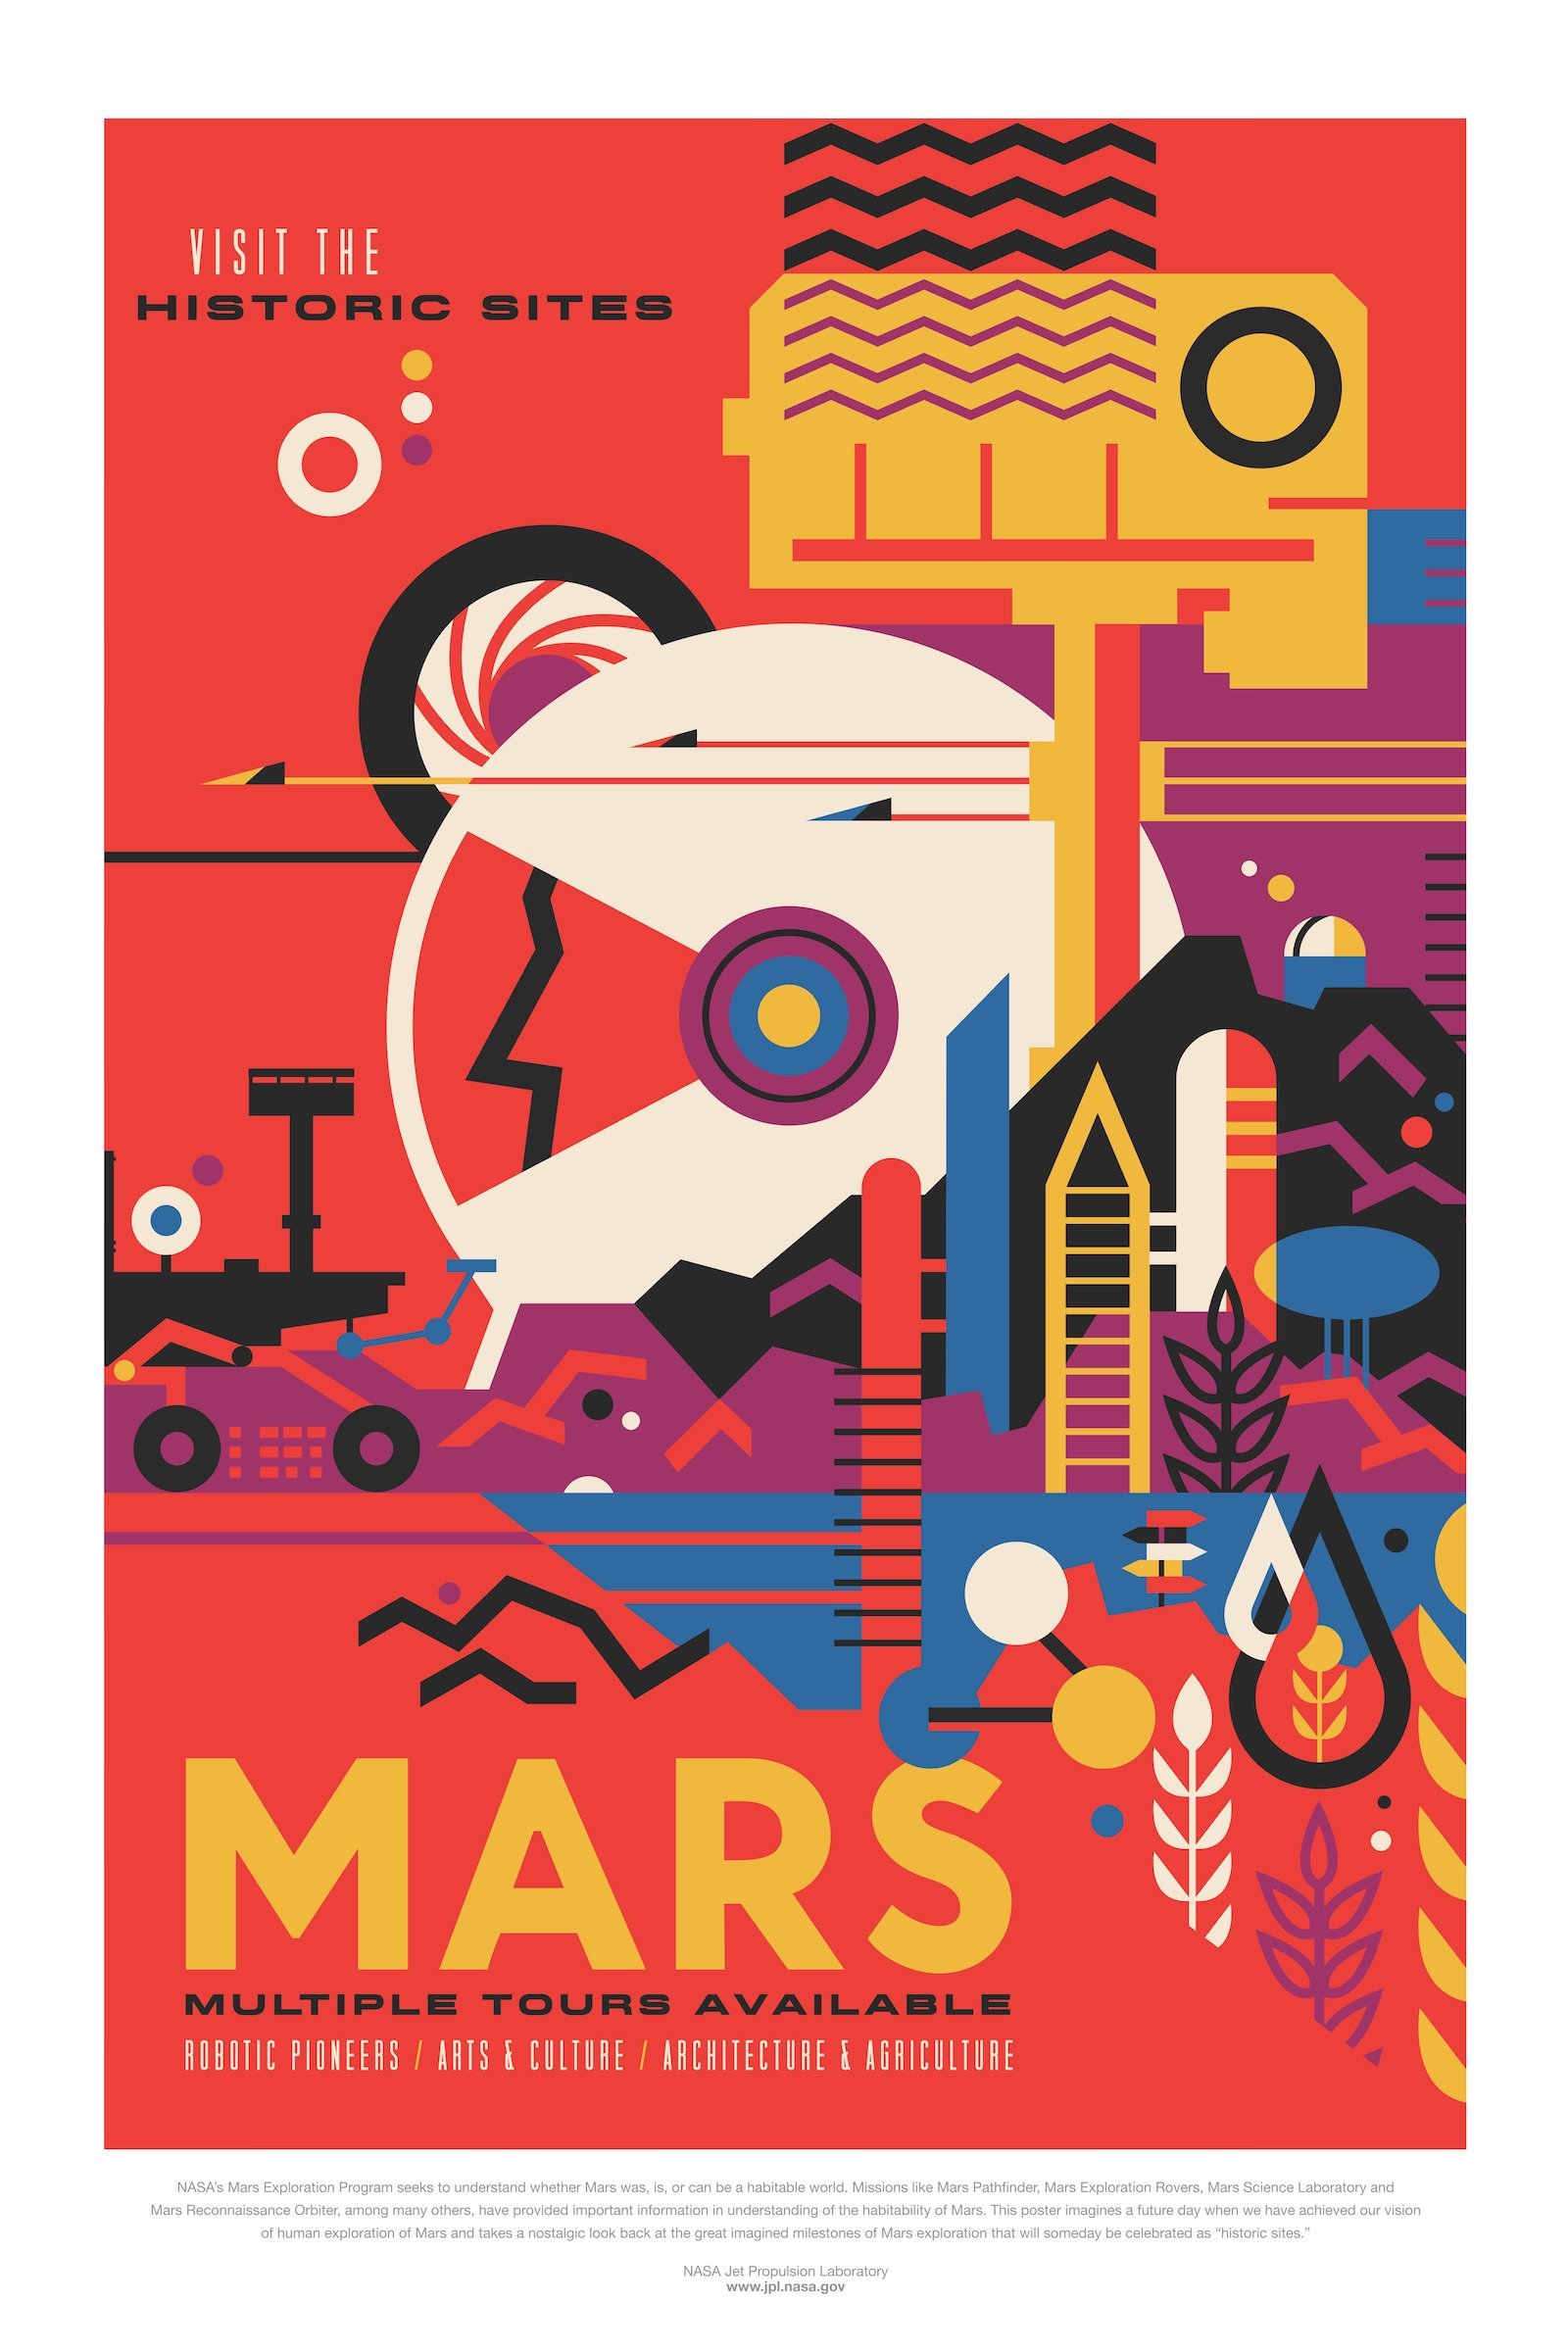 NASA Space Tourism Posters - Free To